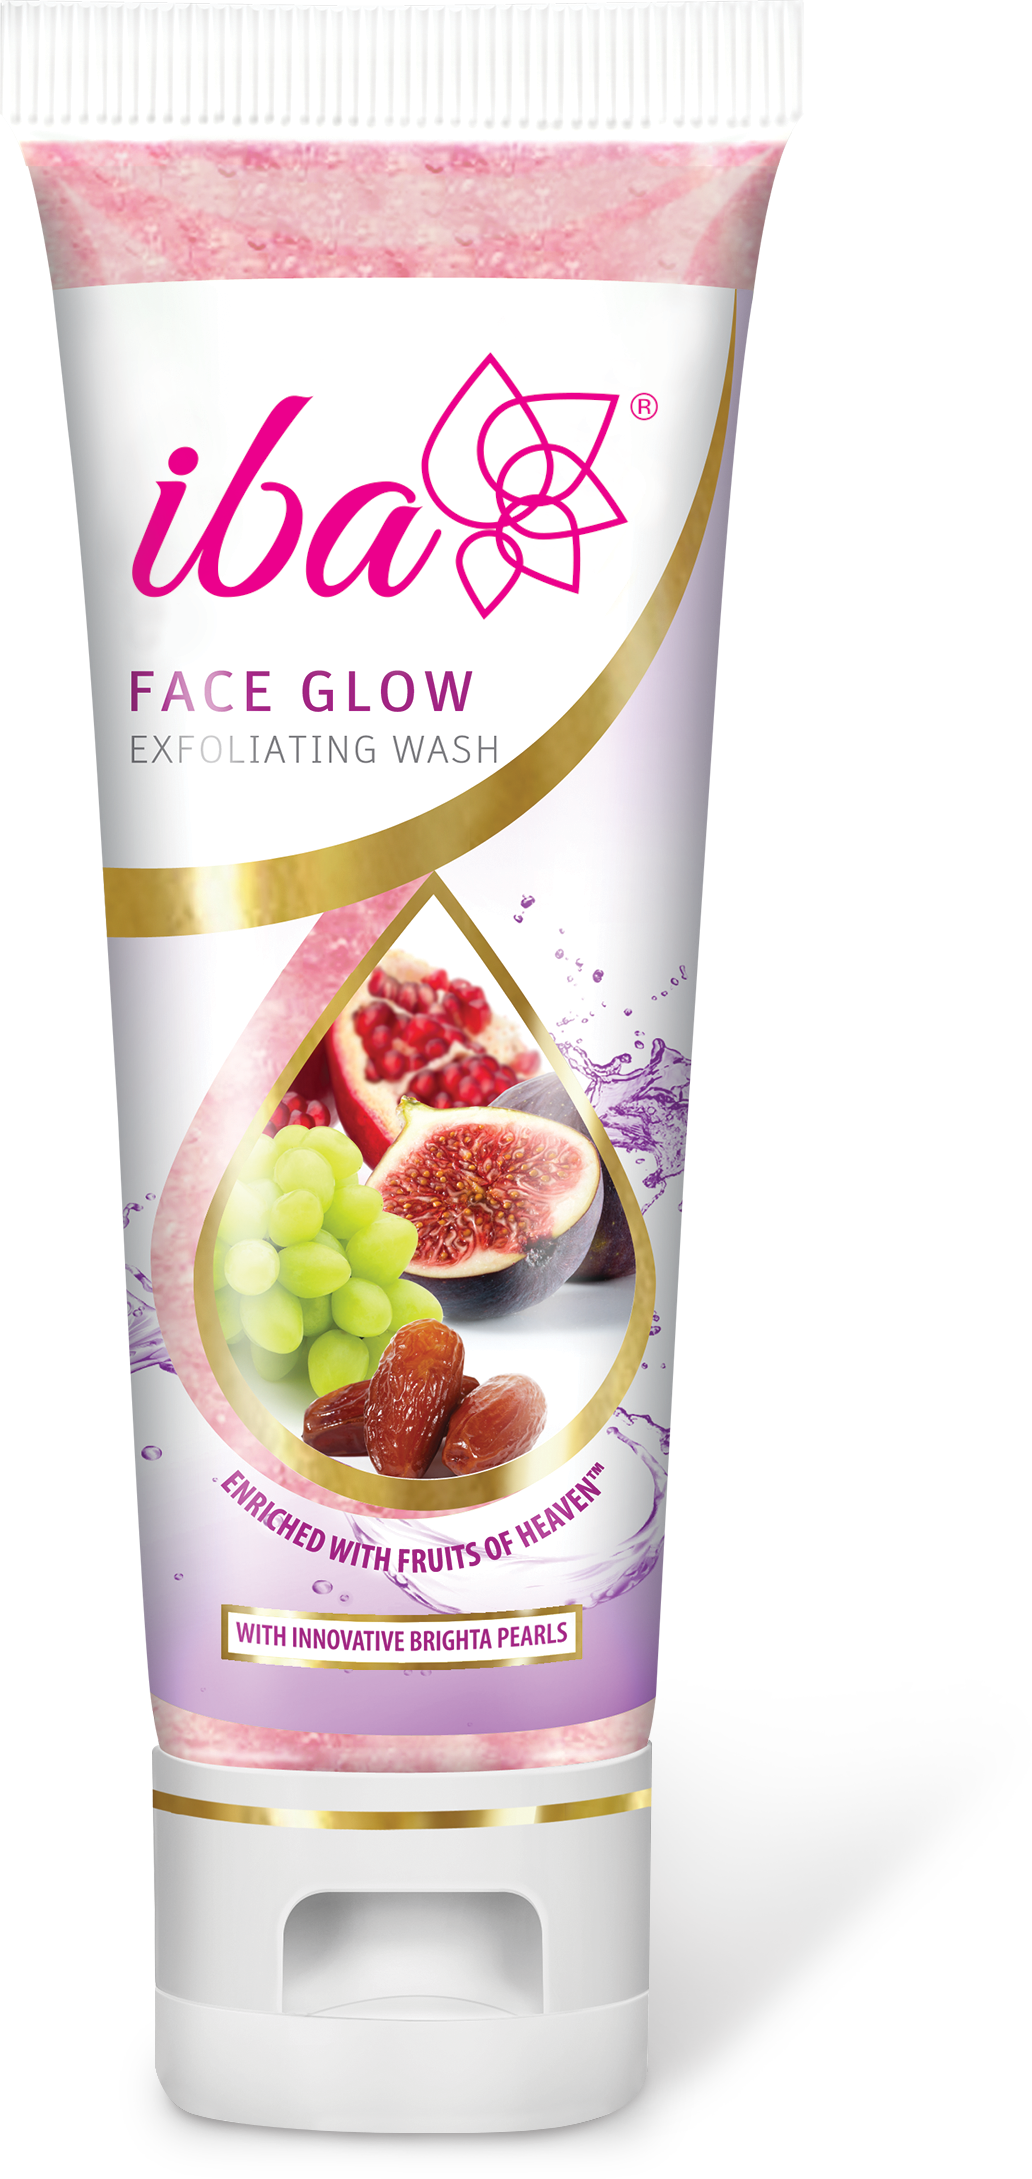 Iba face glow exfoliating wash					